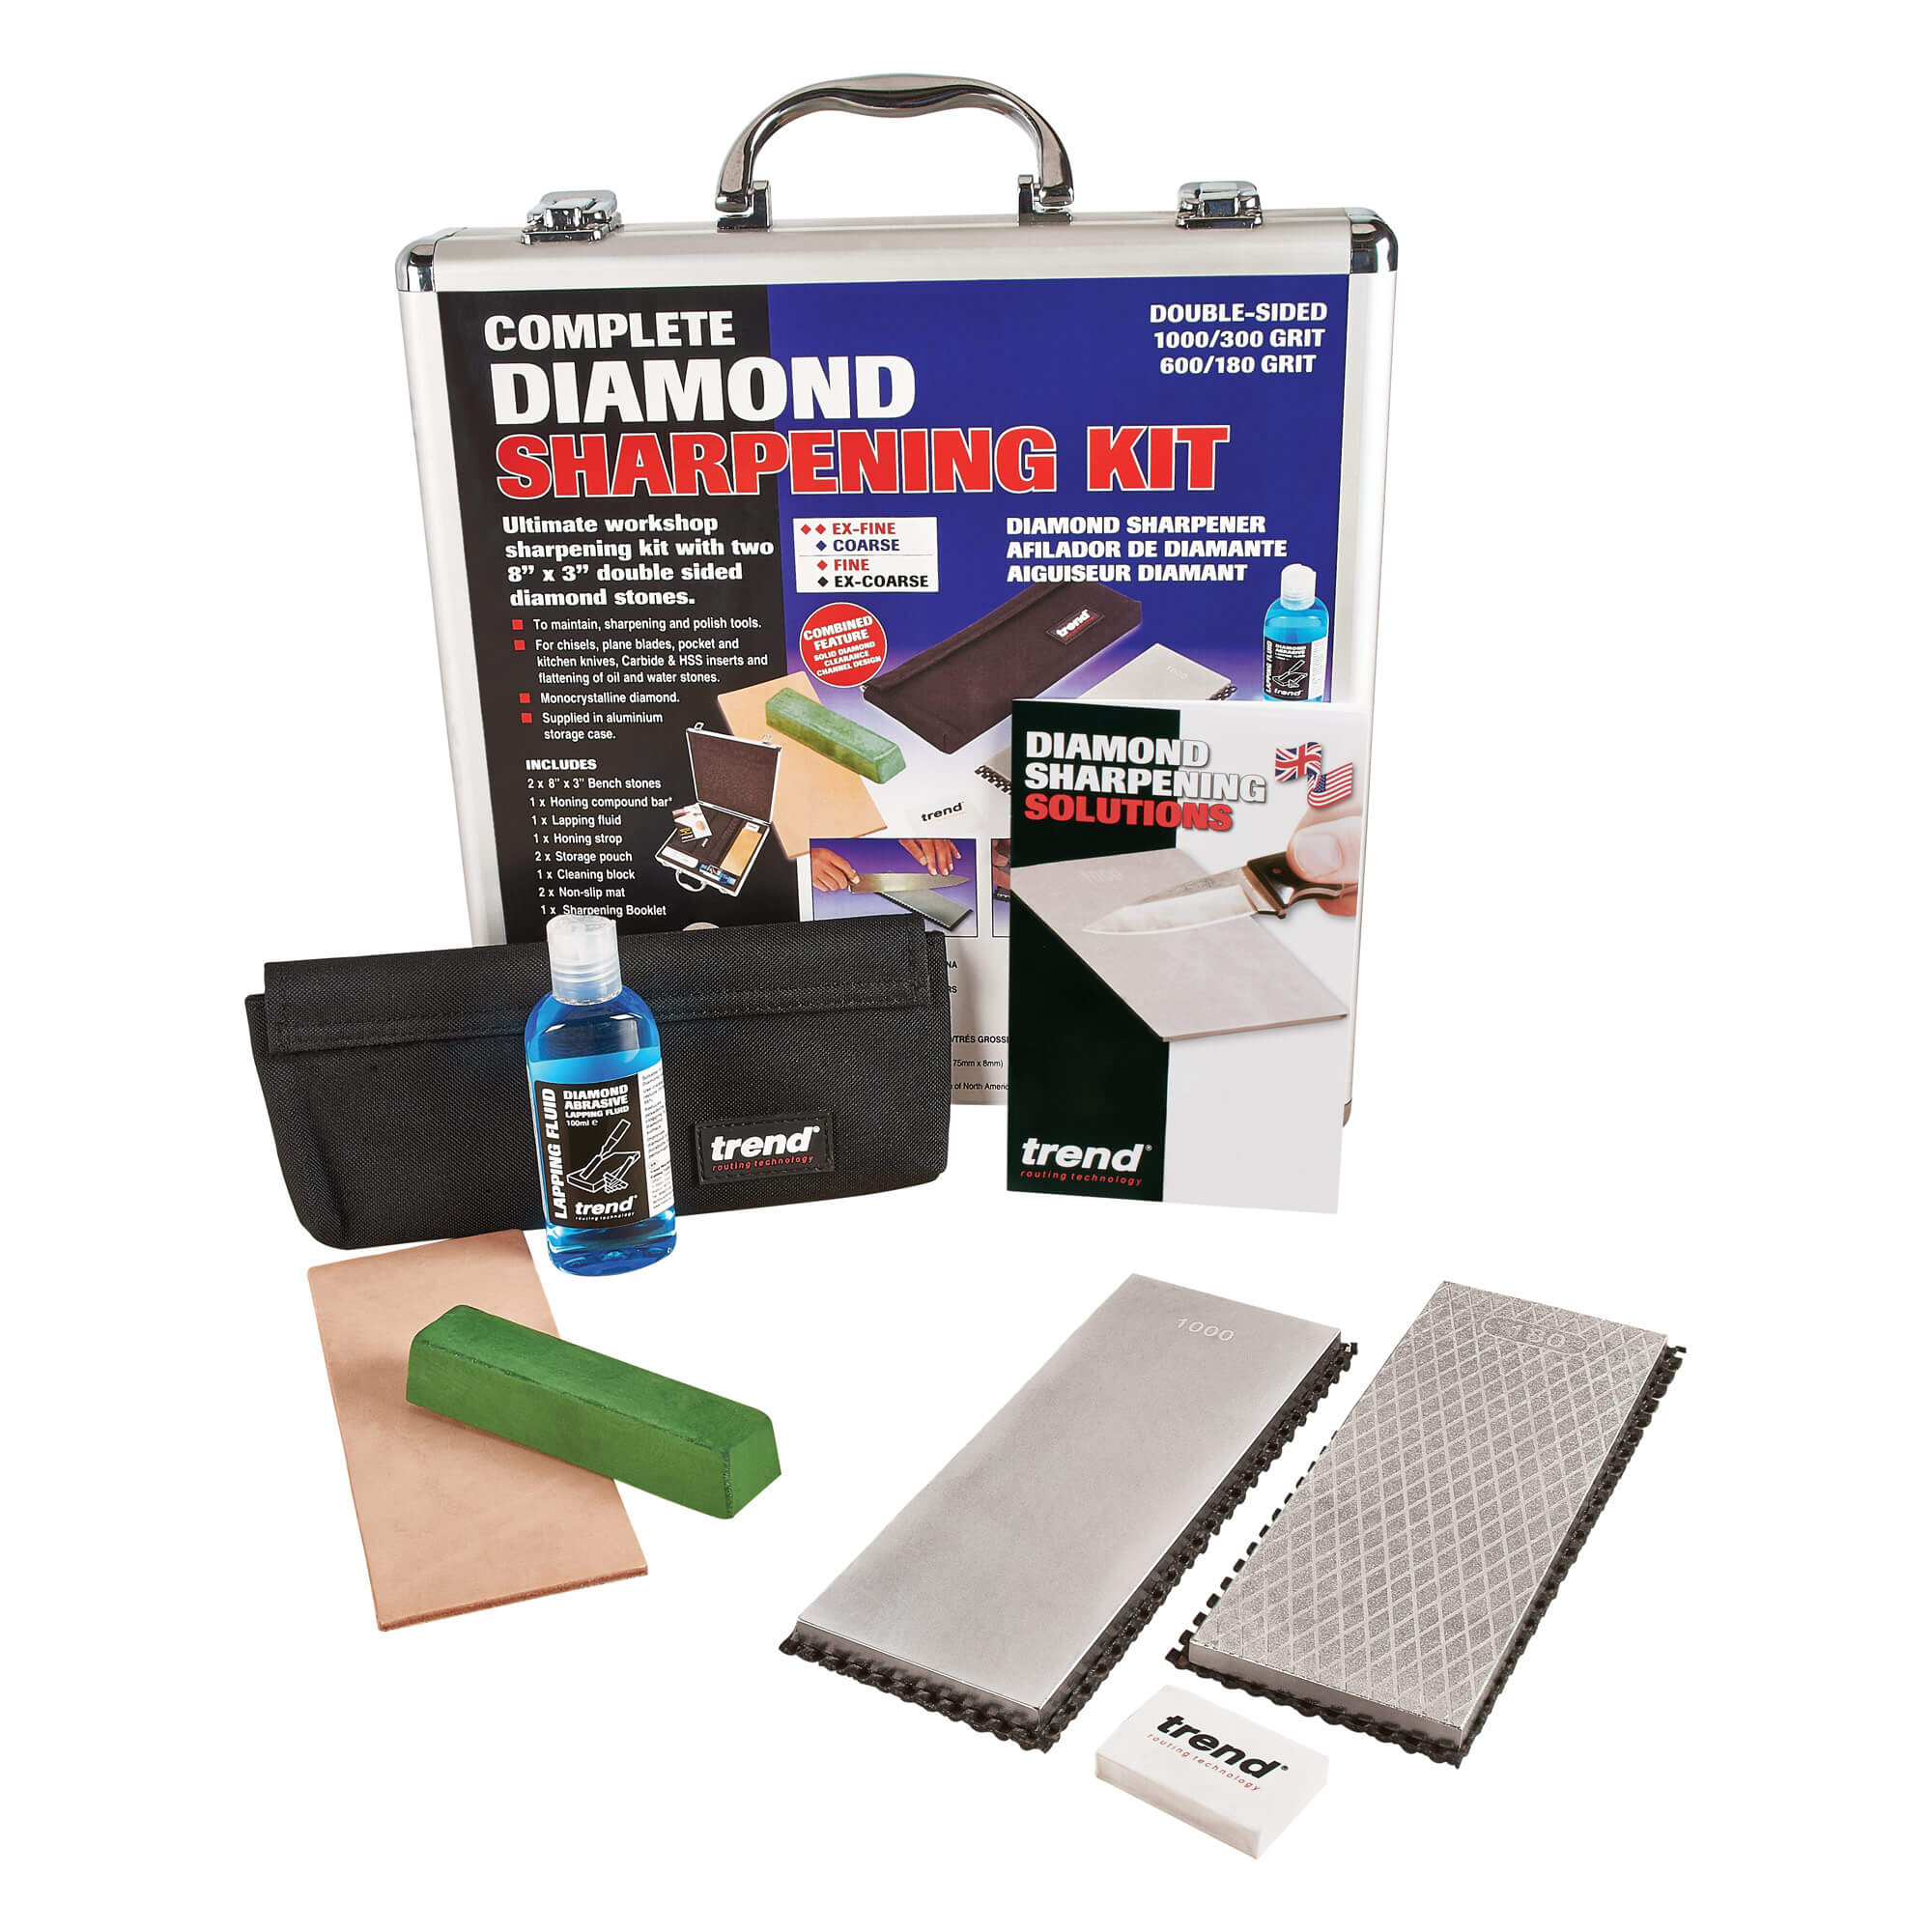 Trend Complete Diamond Sharpening Kit